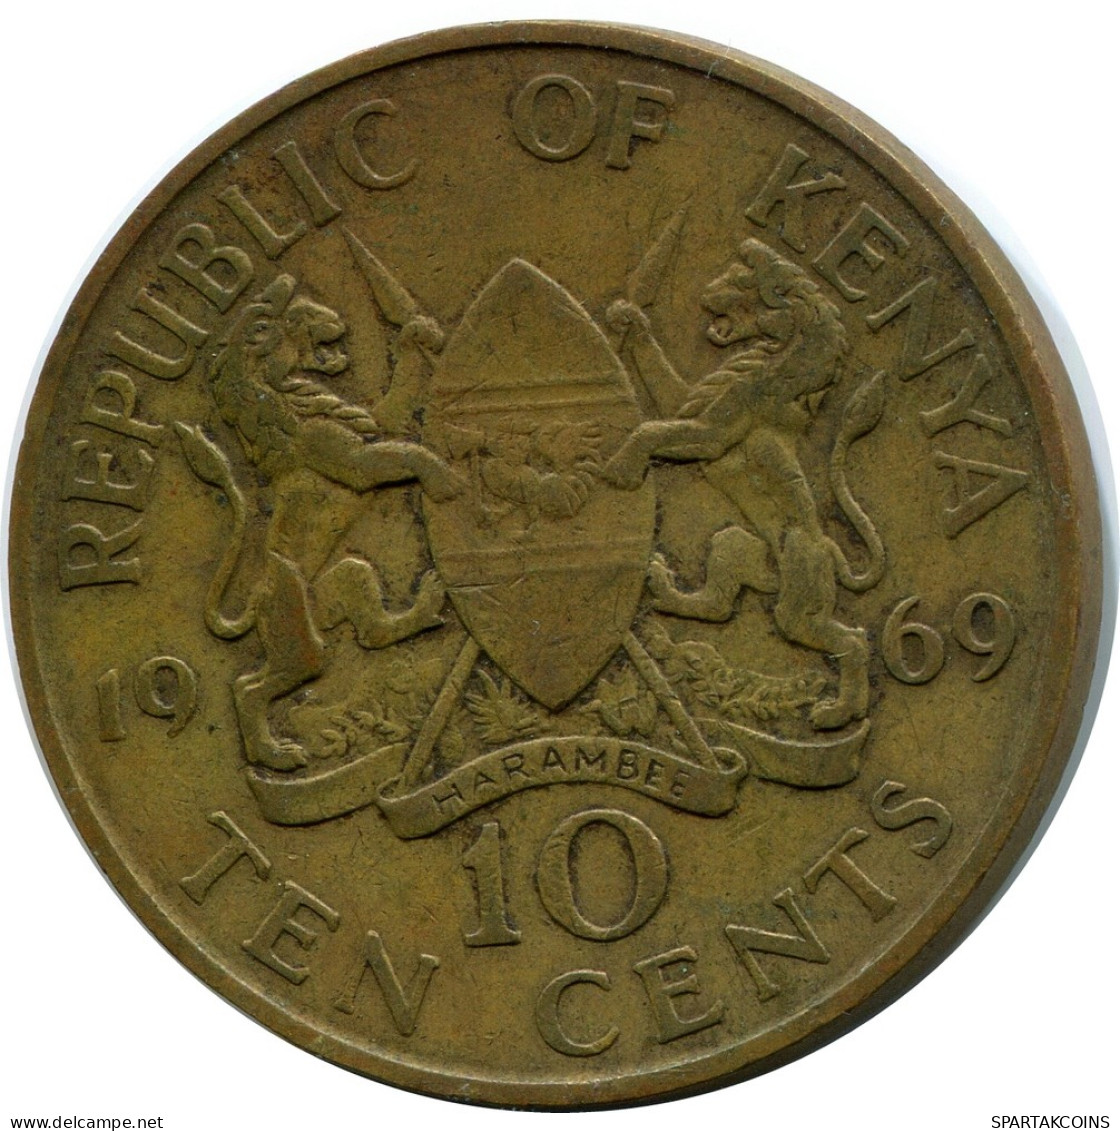 10 CENTS 1969 KENYA Coin #AR852.U - Kenia